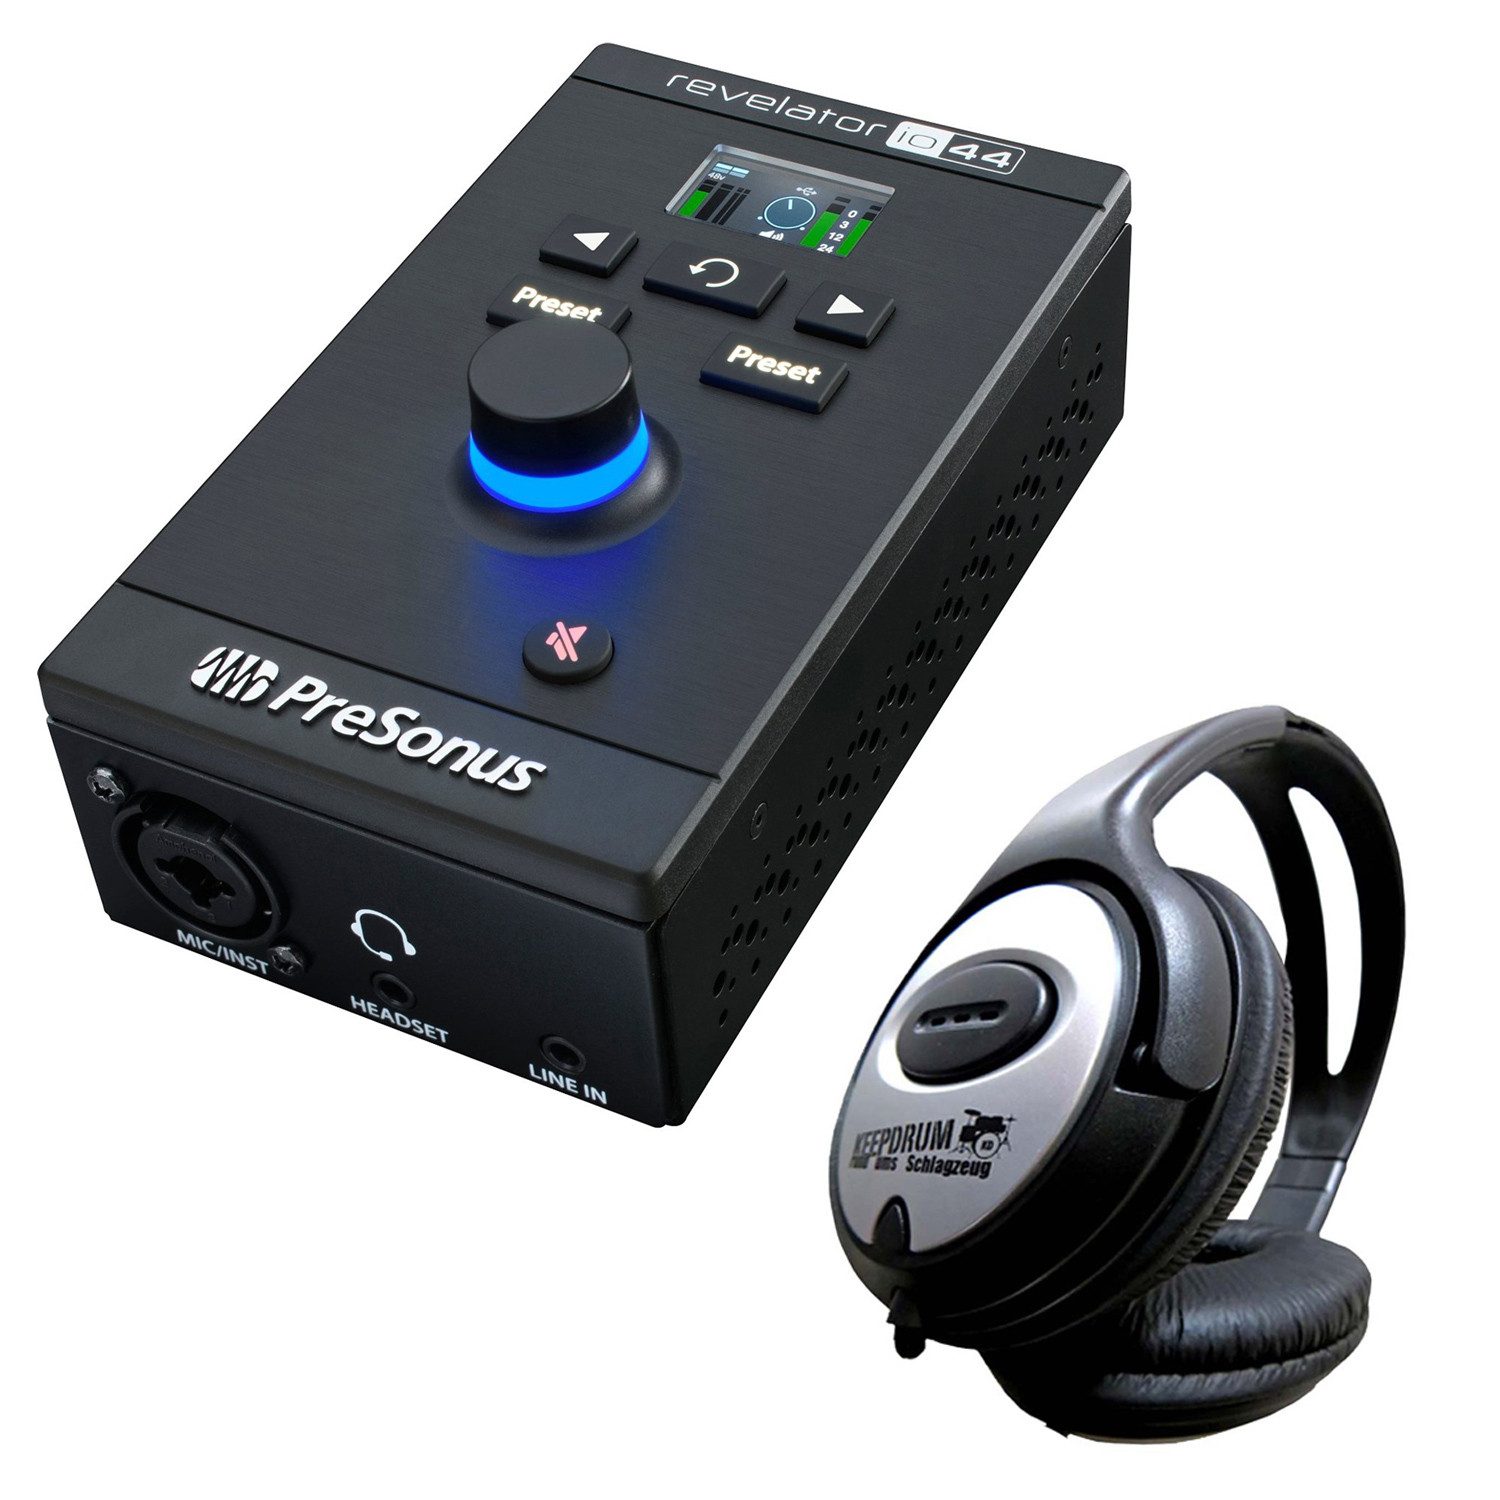 Presonus Mischpult Revelator io44, (Audio-Interface, USB-C), mit keepdrum Kopfhörer